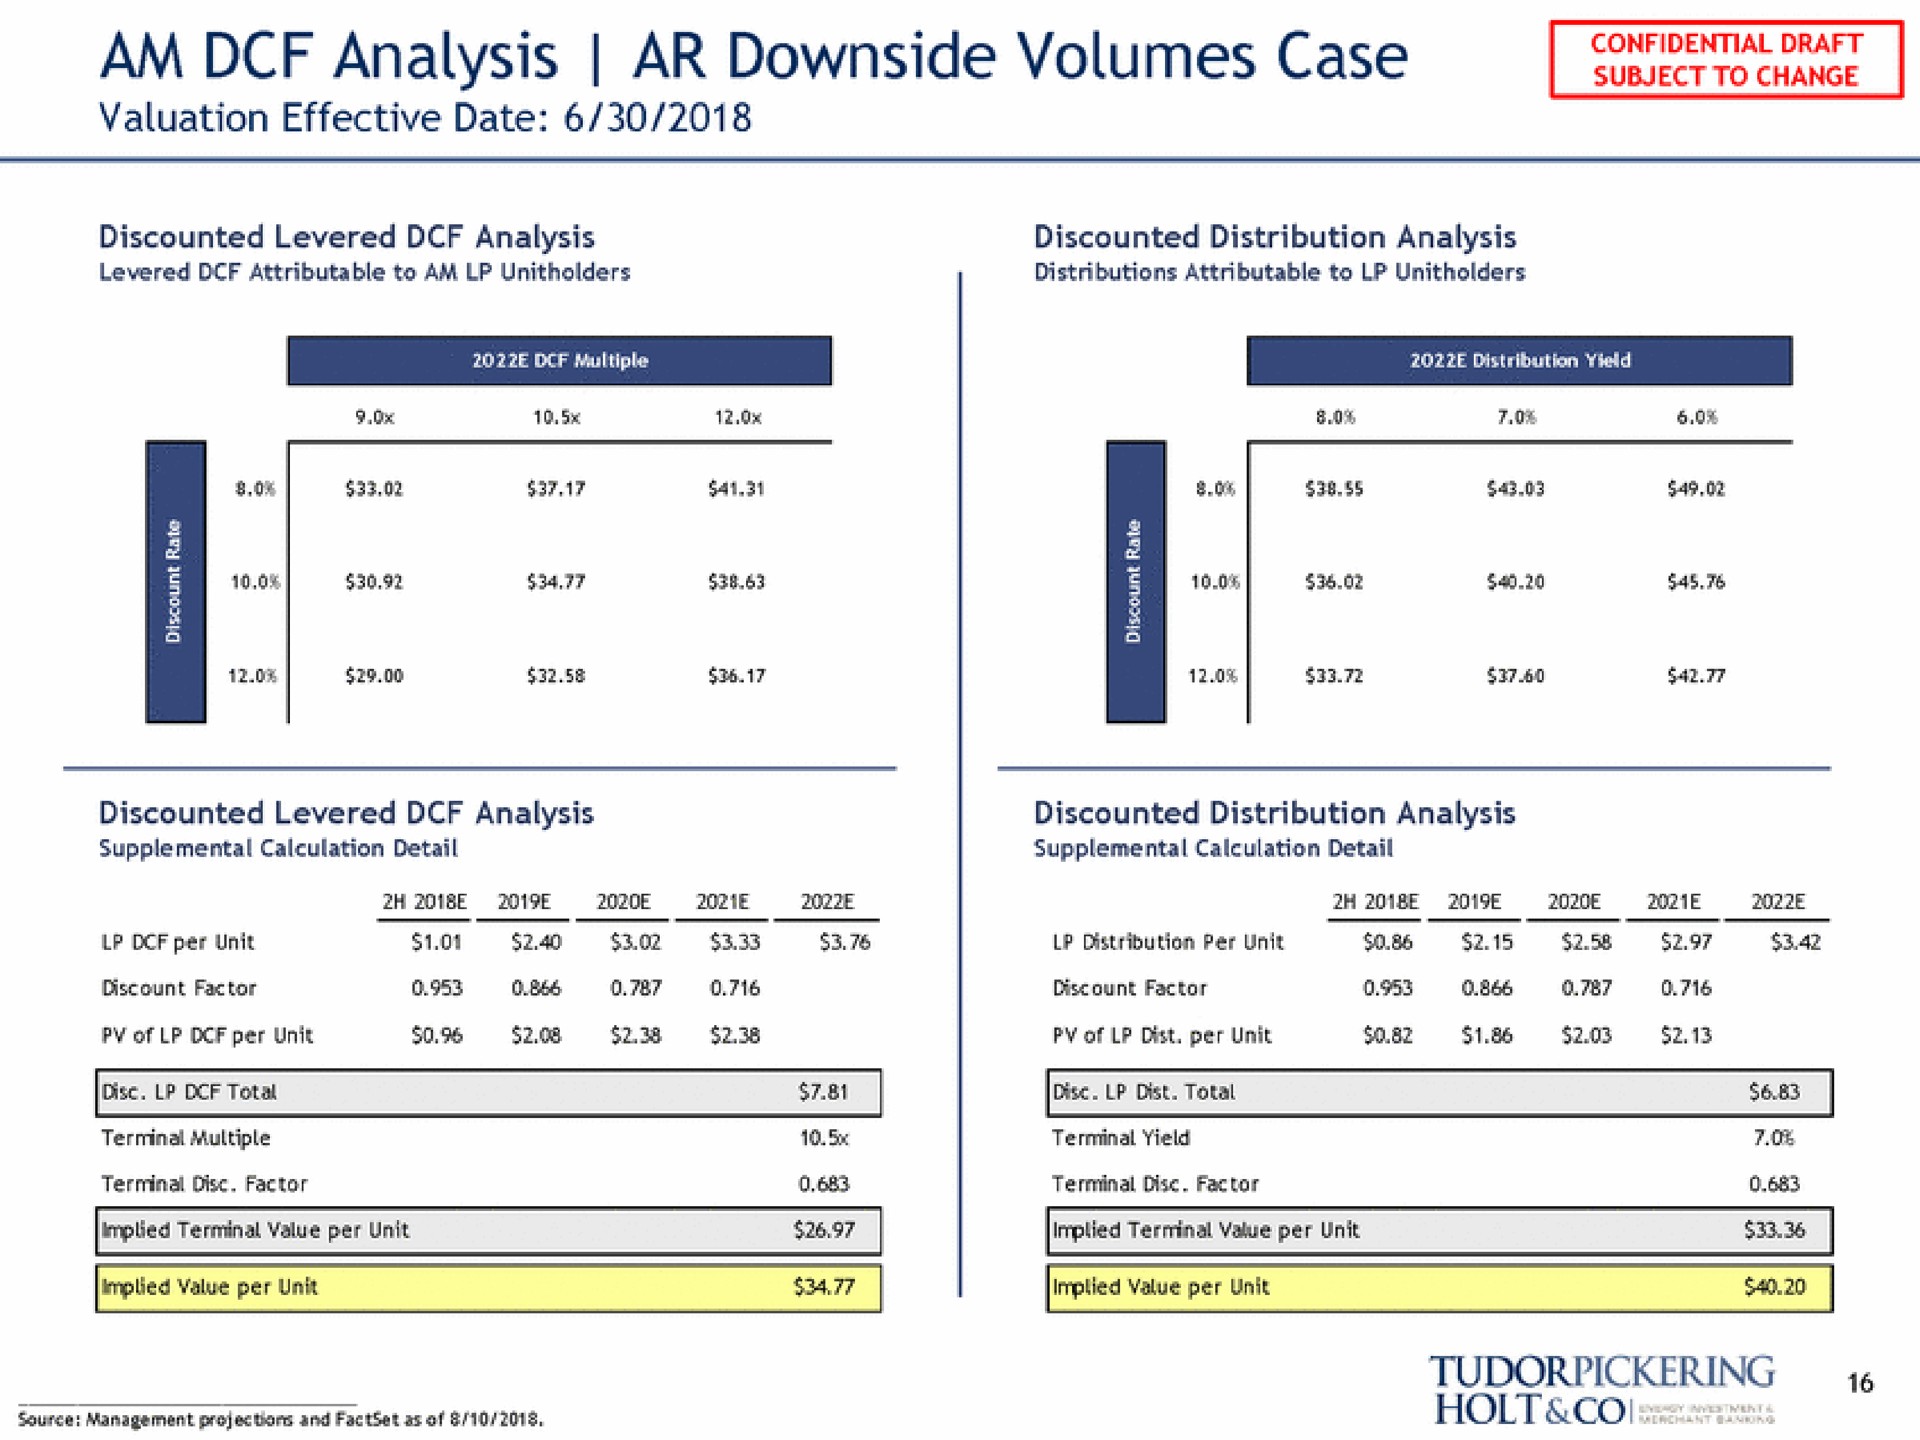 am analysis downside volumes case holt col | Tudor, Pickering, Holt & Co